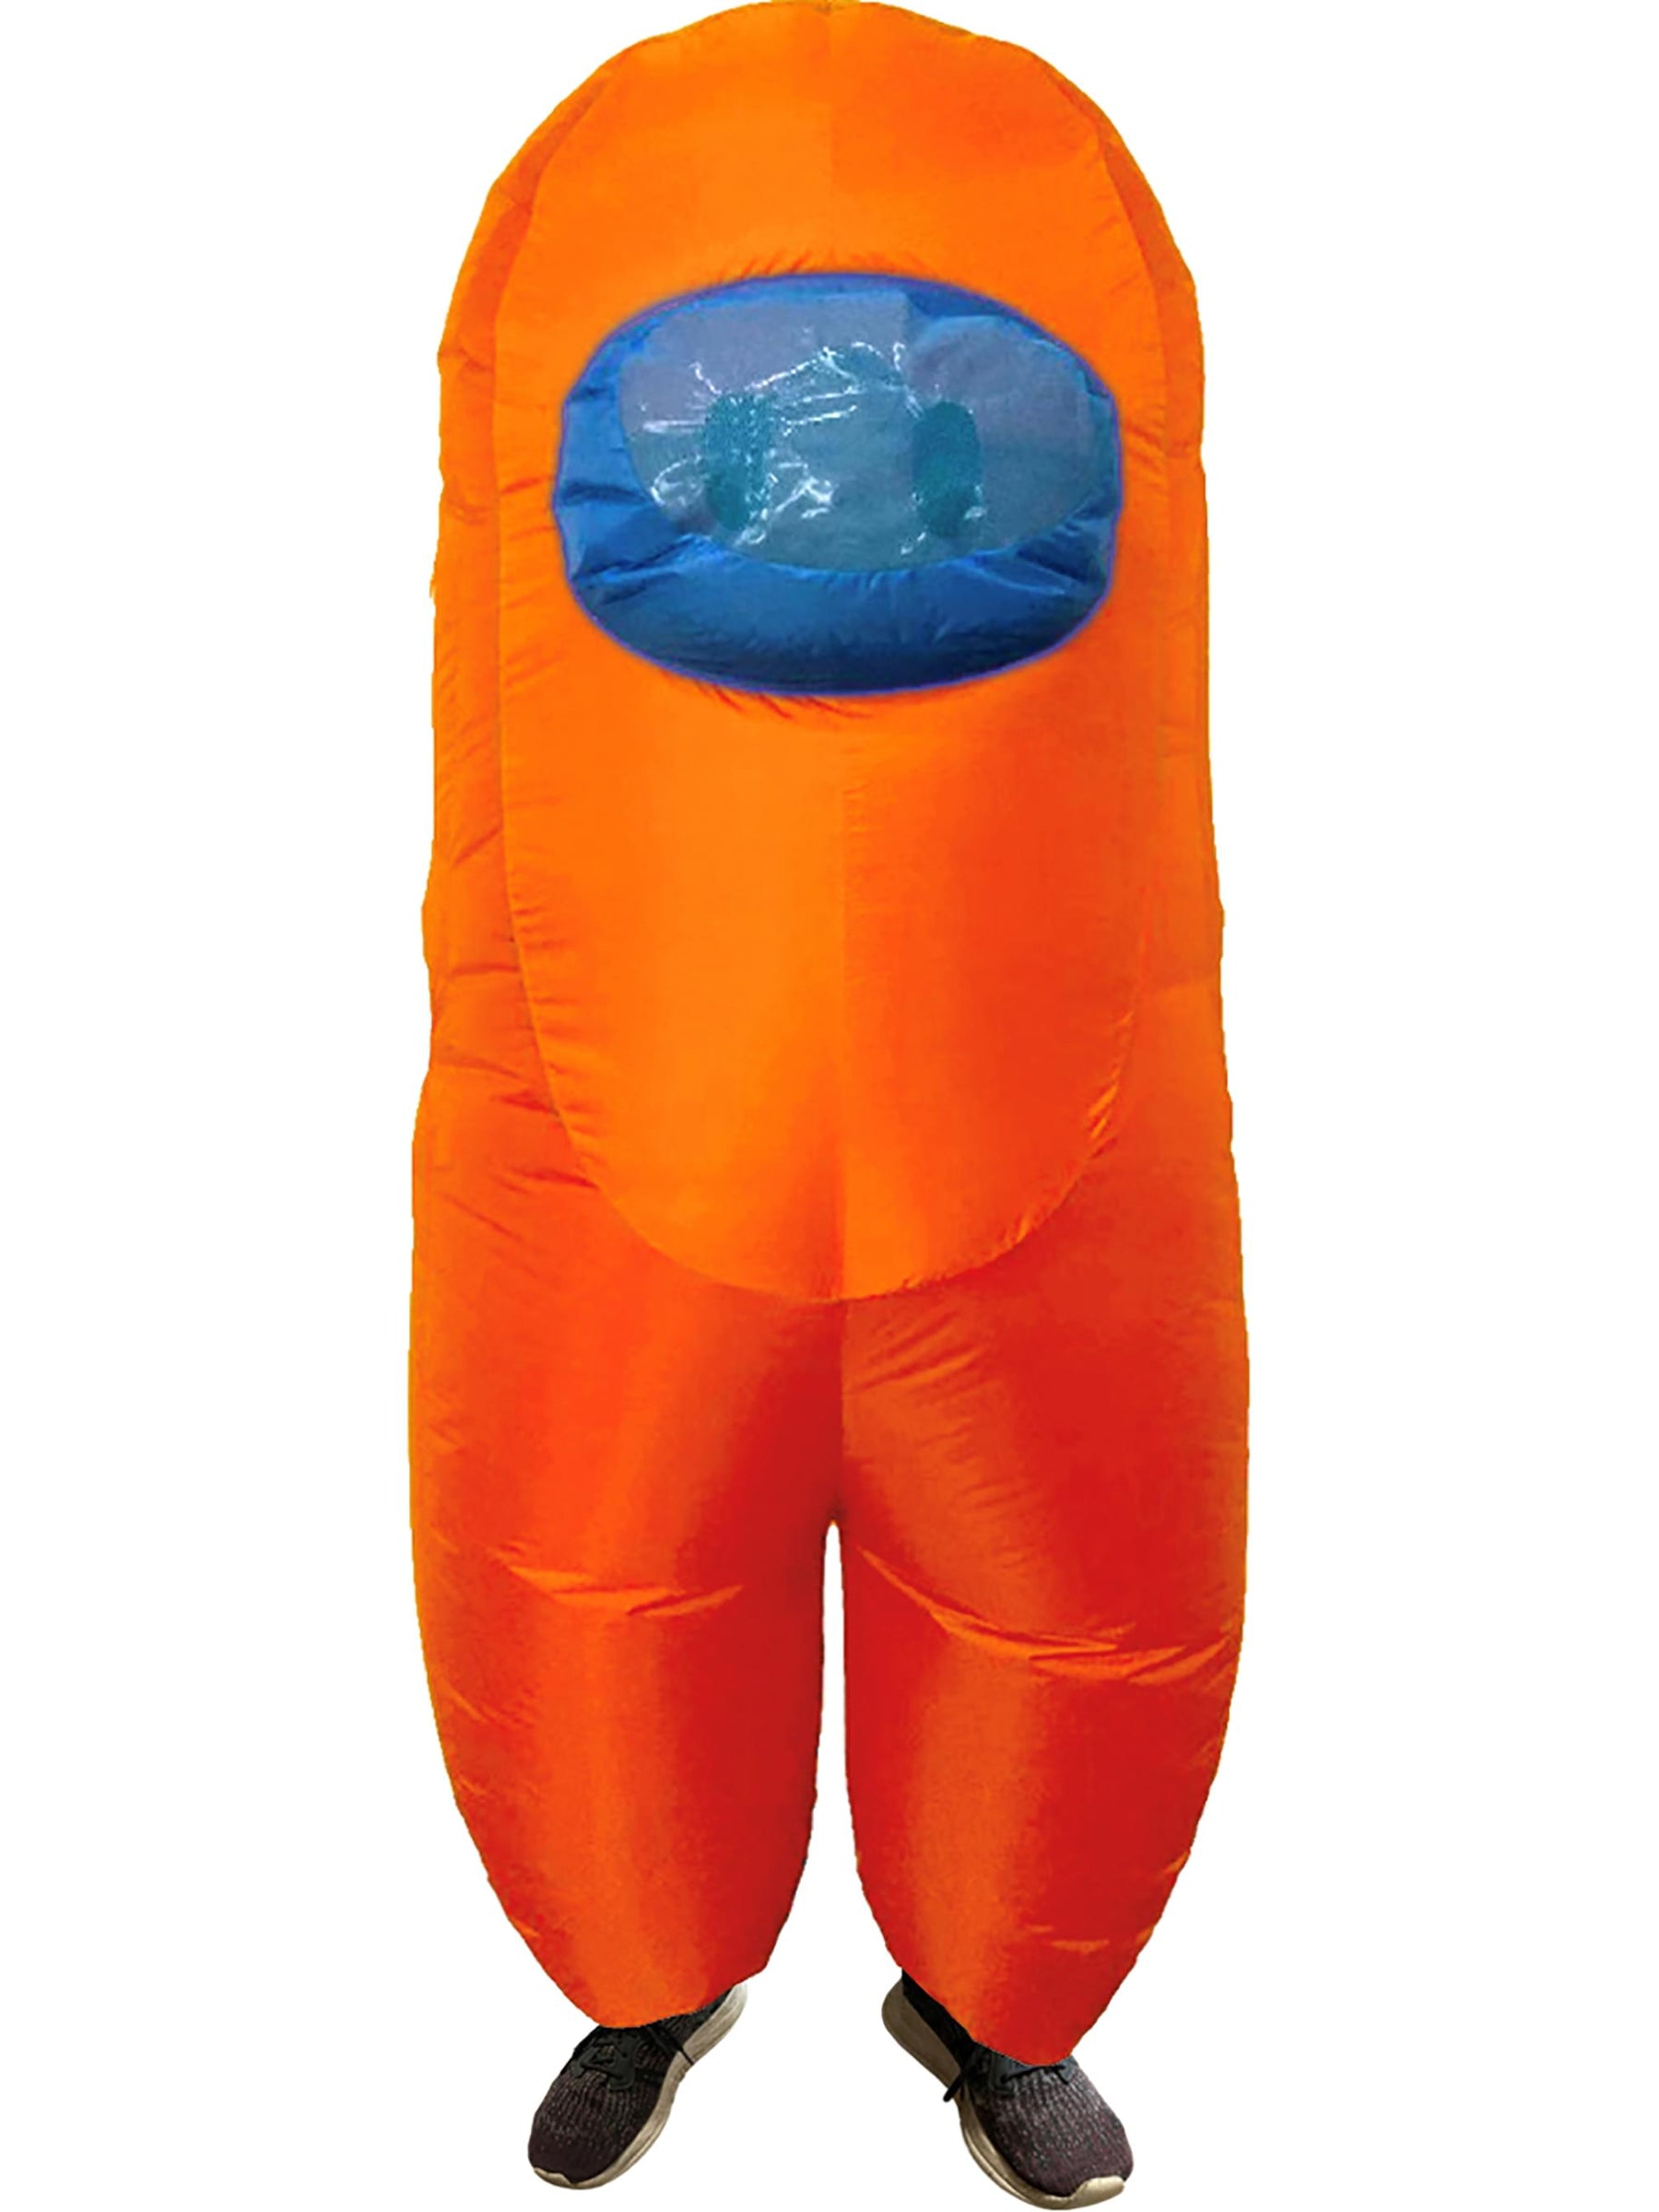 Orange Imposter Inflatable Adult Costume | Standard